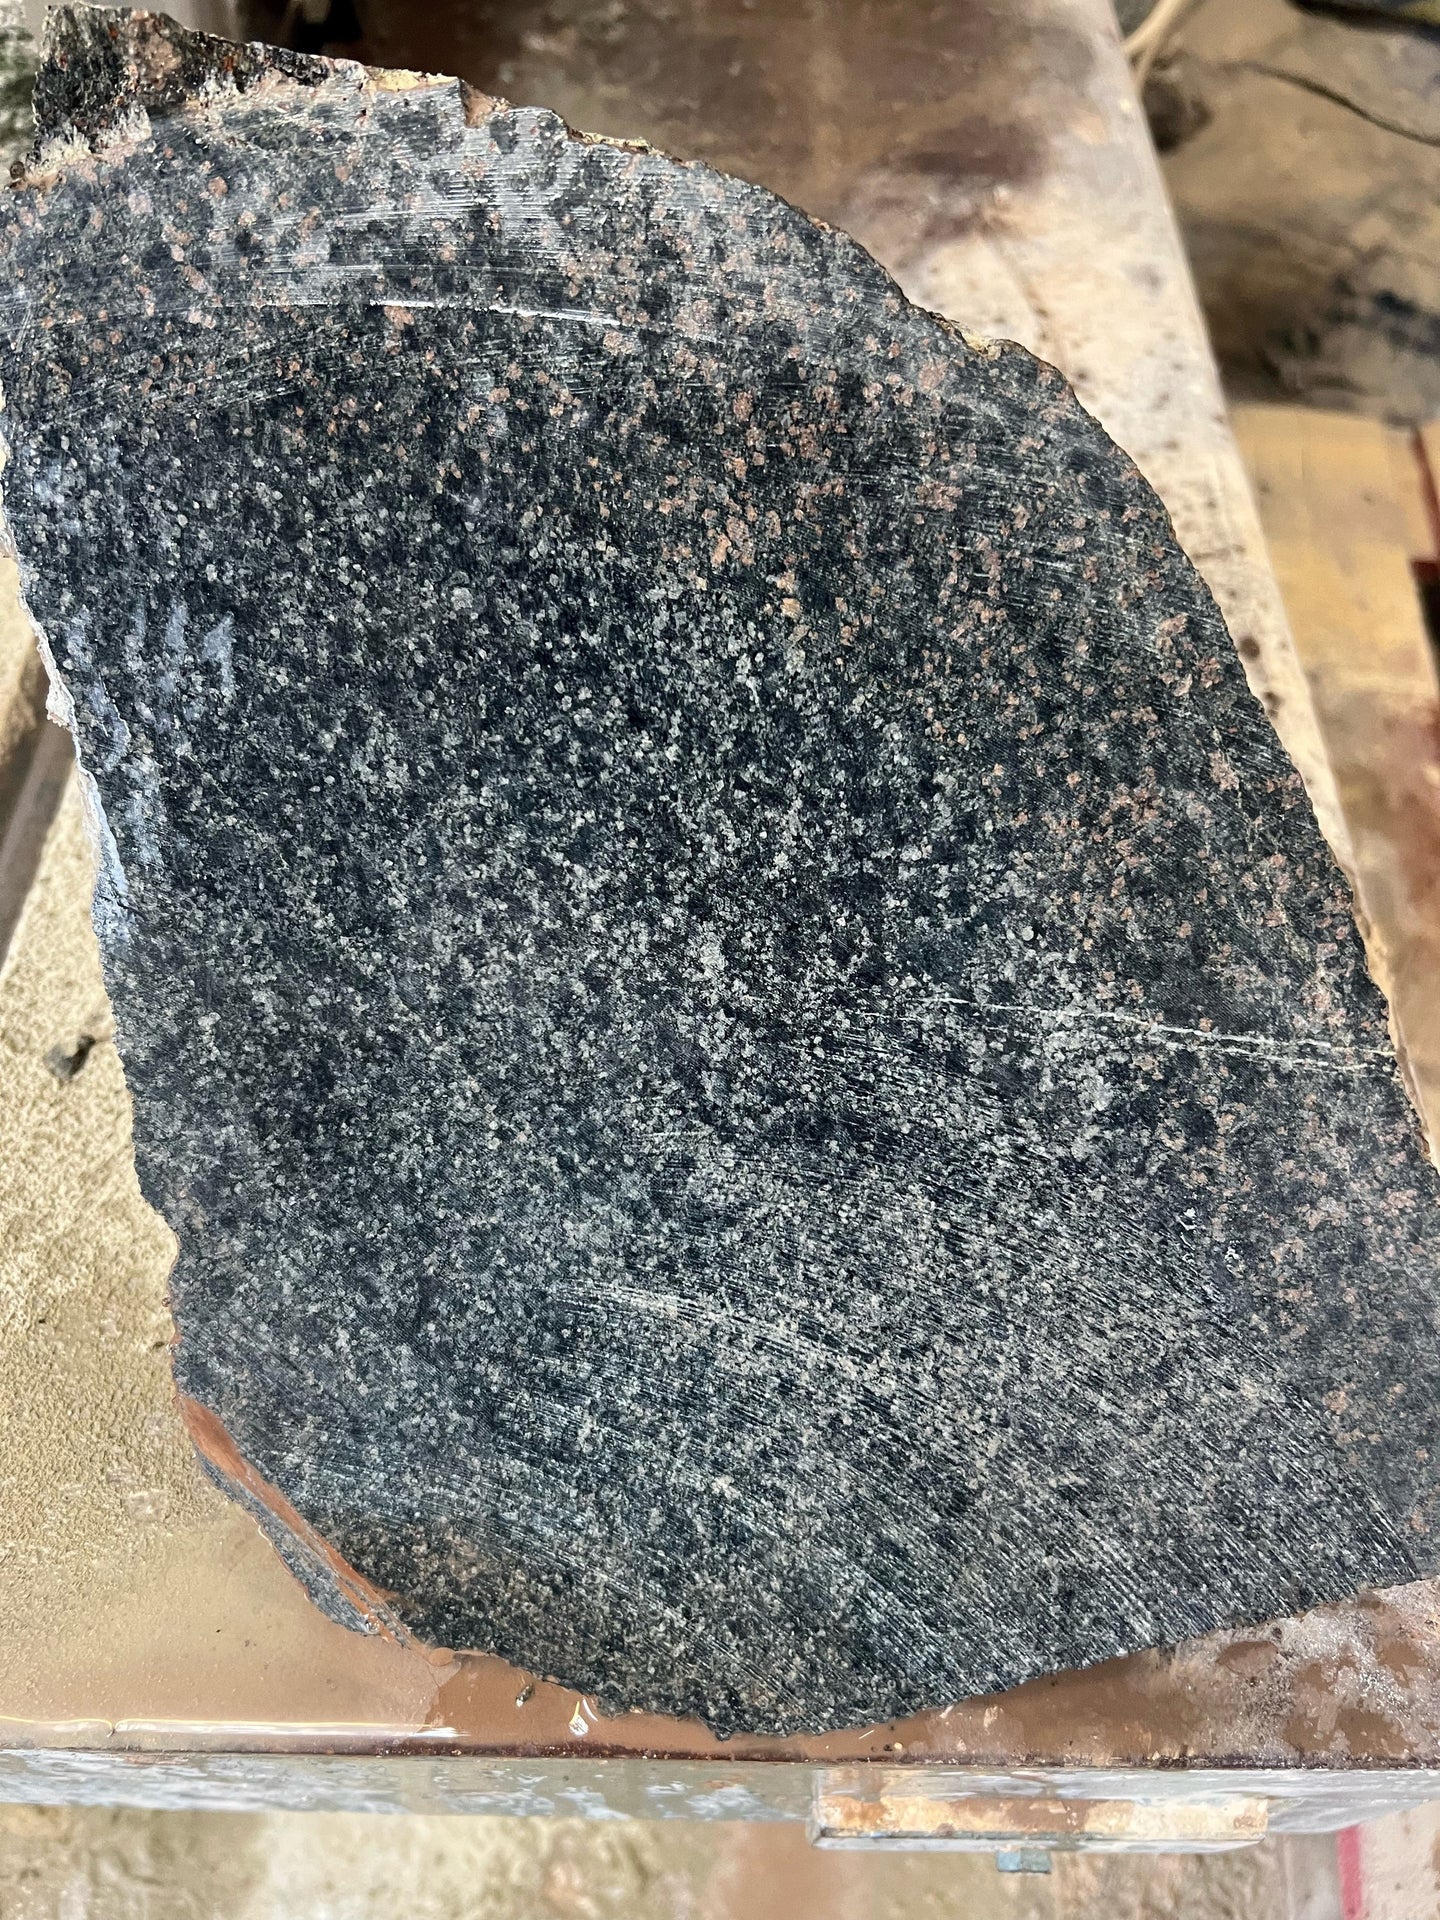 Polyphant Soapstone Boulders